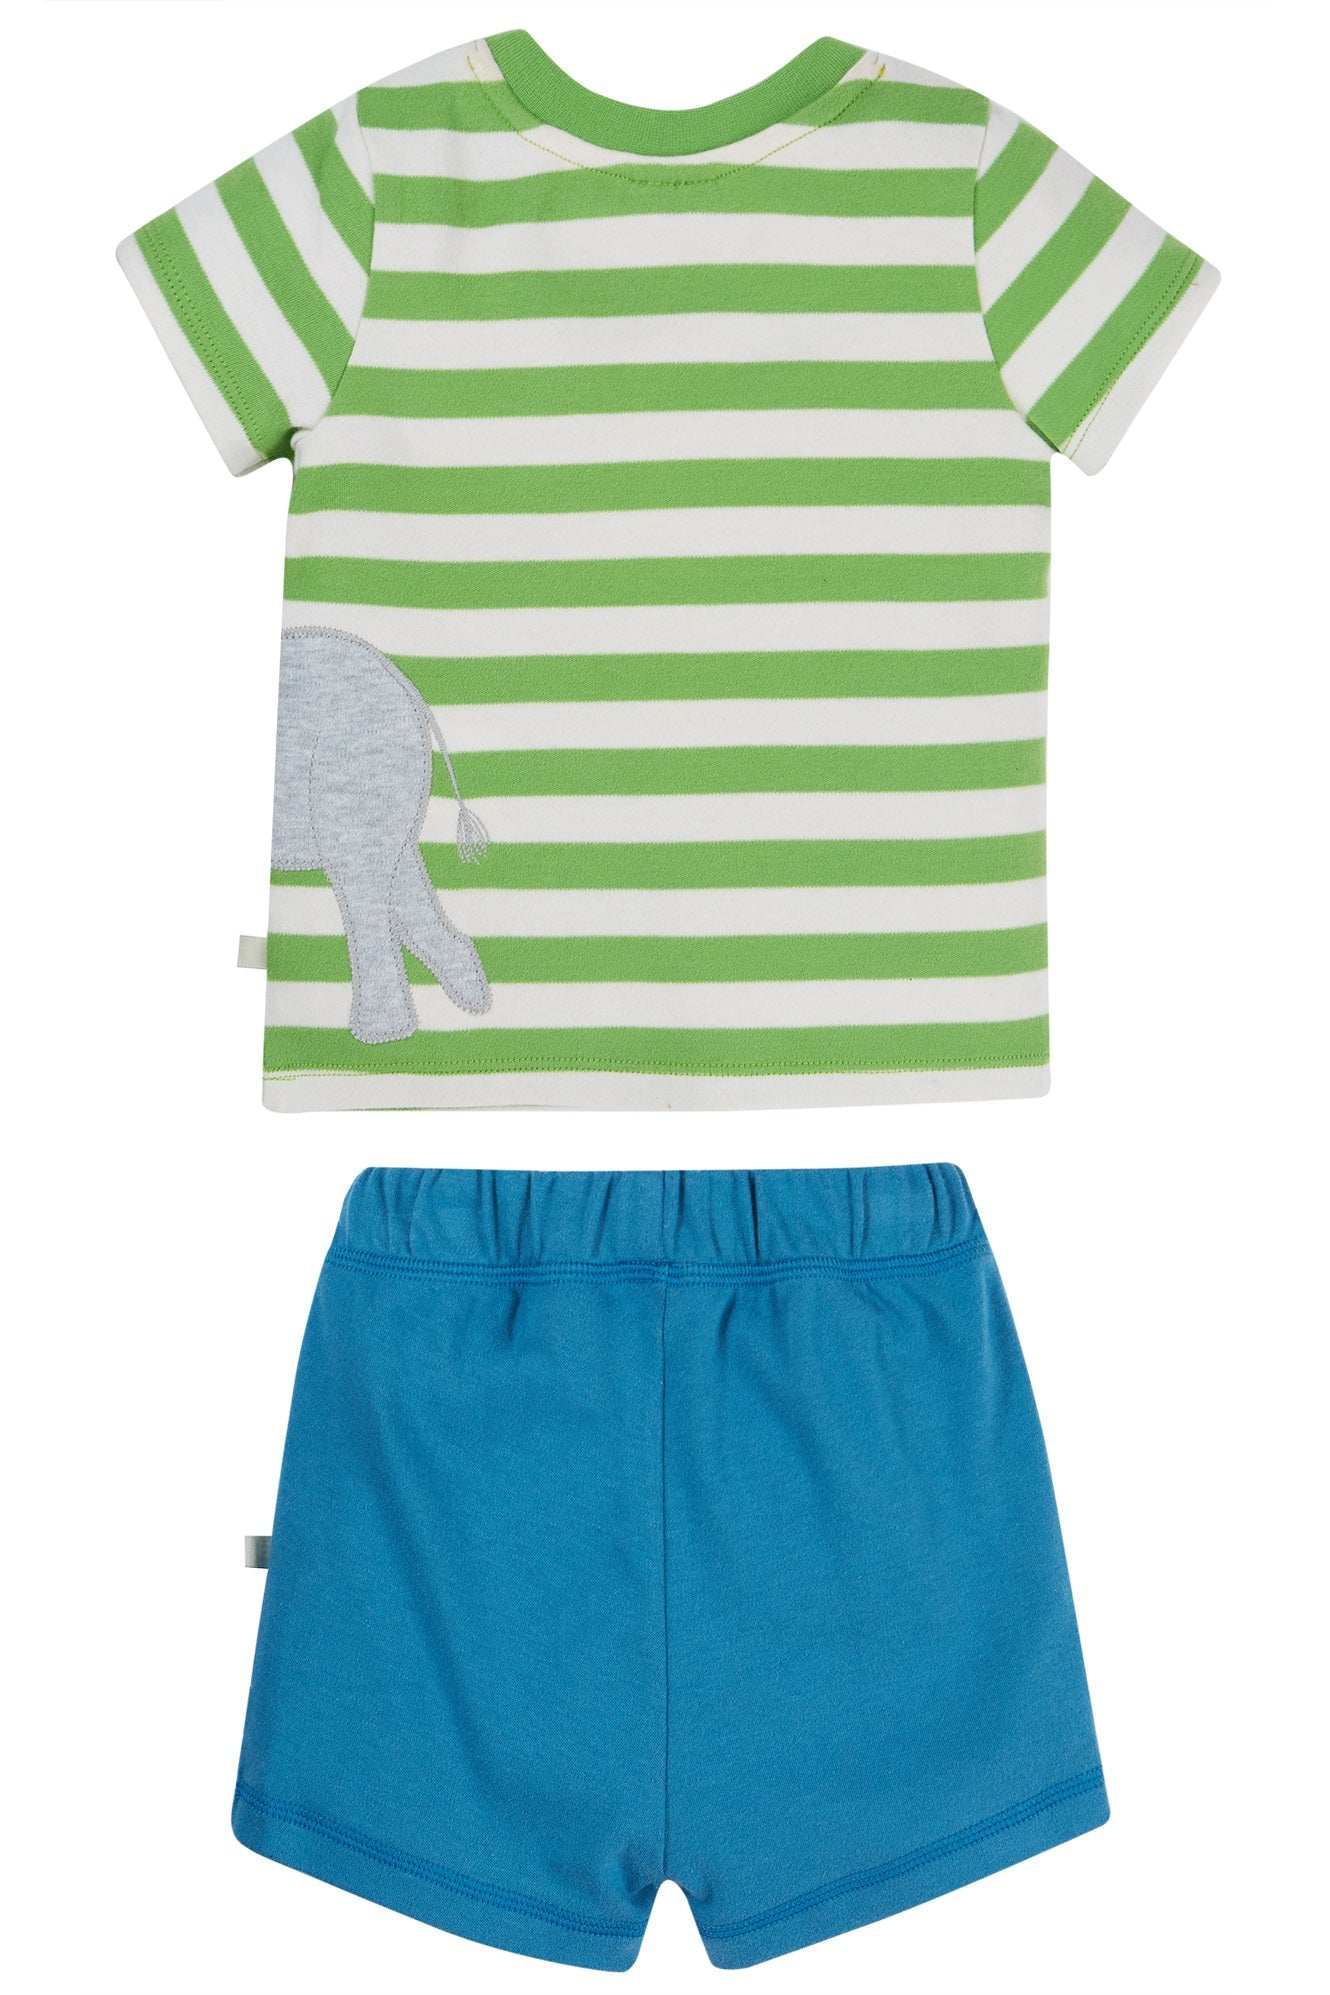 Frugi Easy On Wrap Around Outfit - Kiwi Stripe/Elephant-Kids-Ohh! By Gum - Shop Sustainable